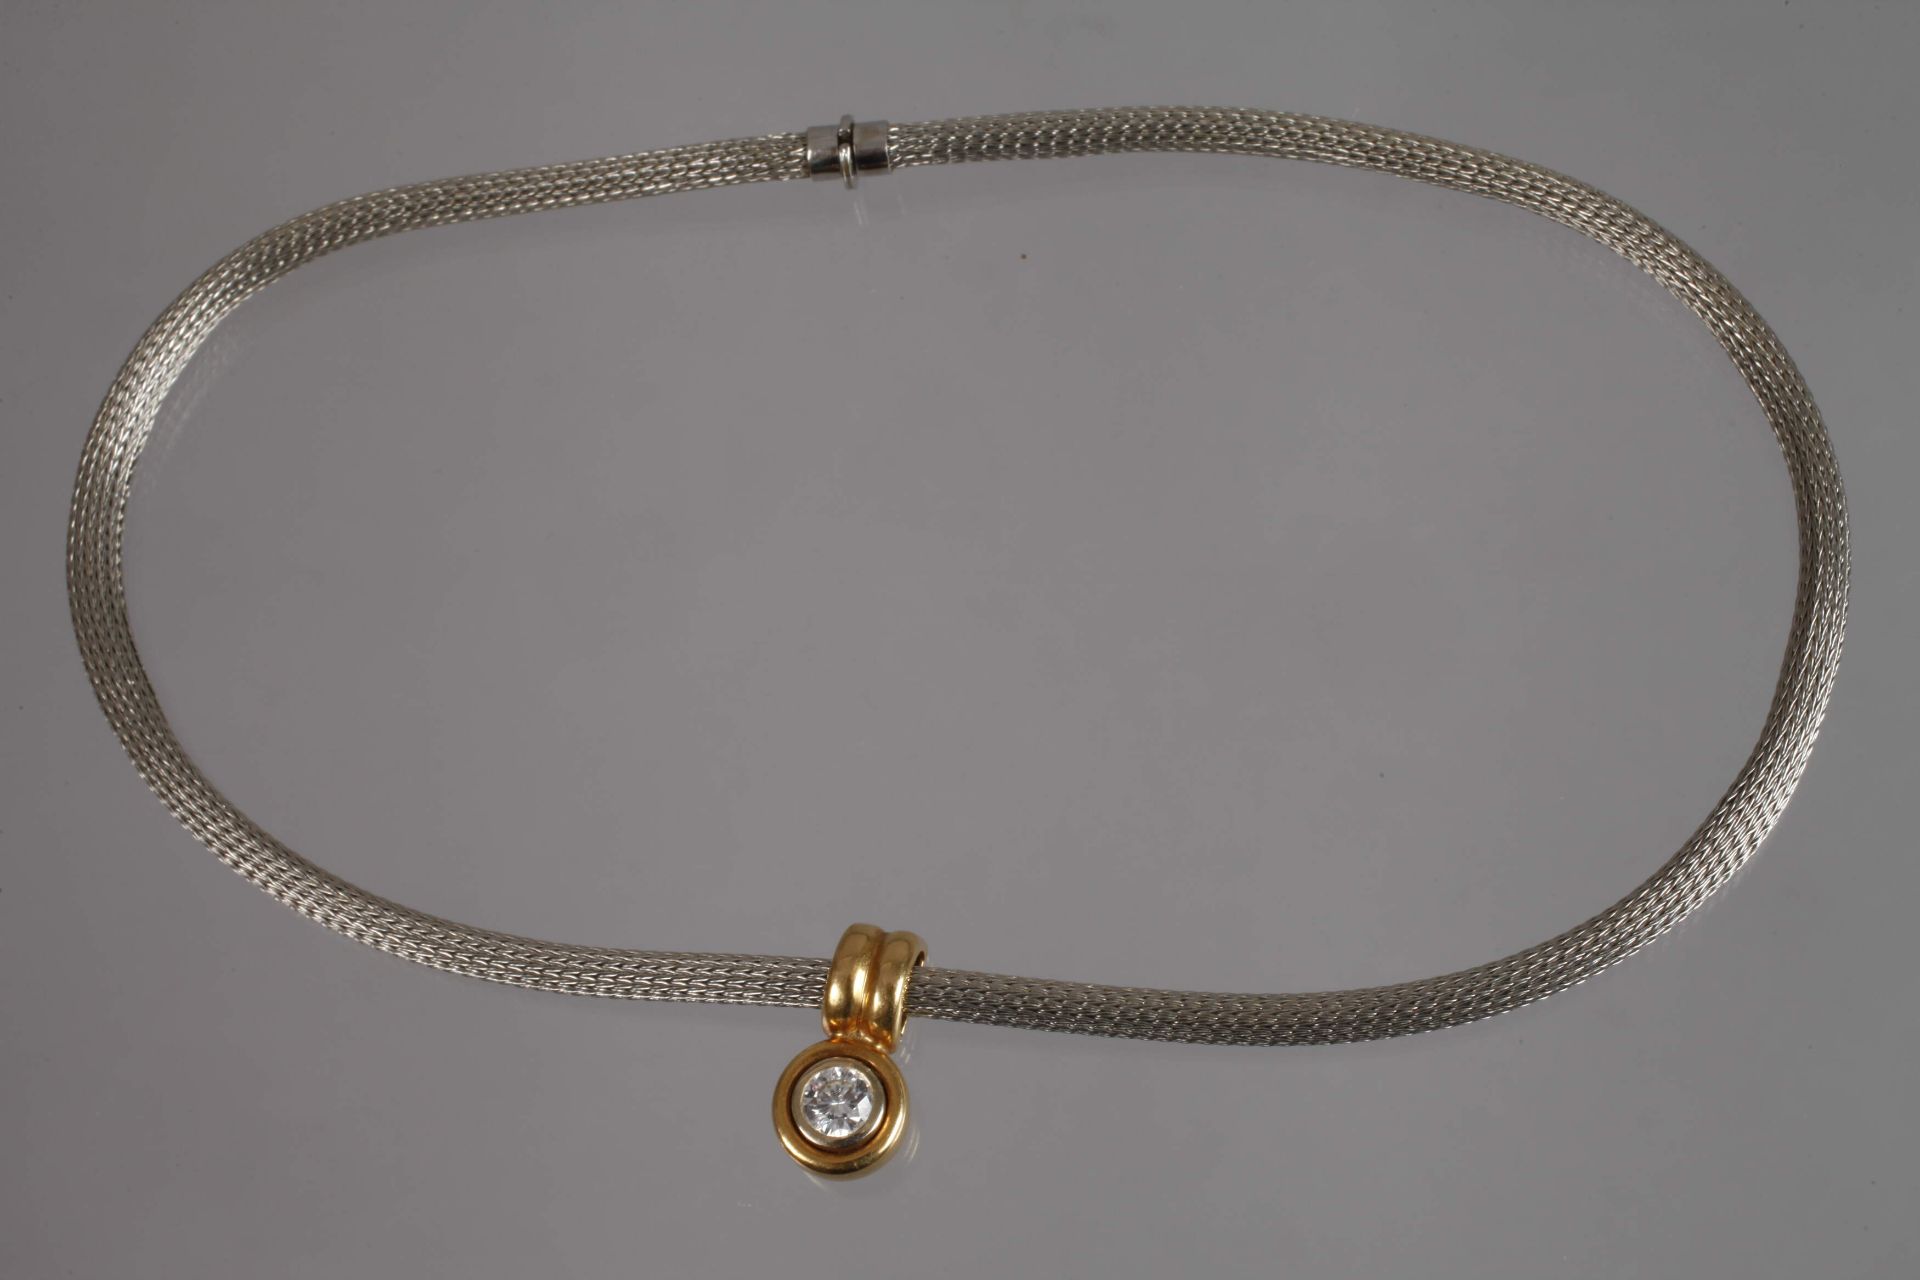 Diamond pendant on chain - Image 3 of 3